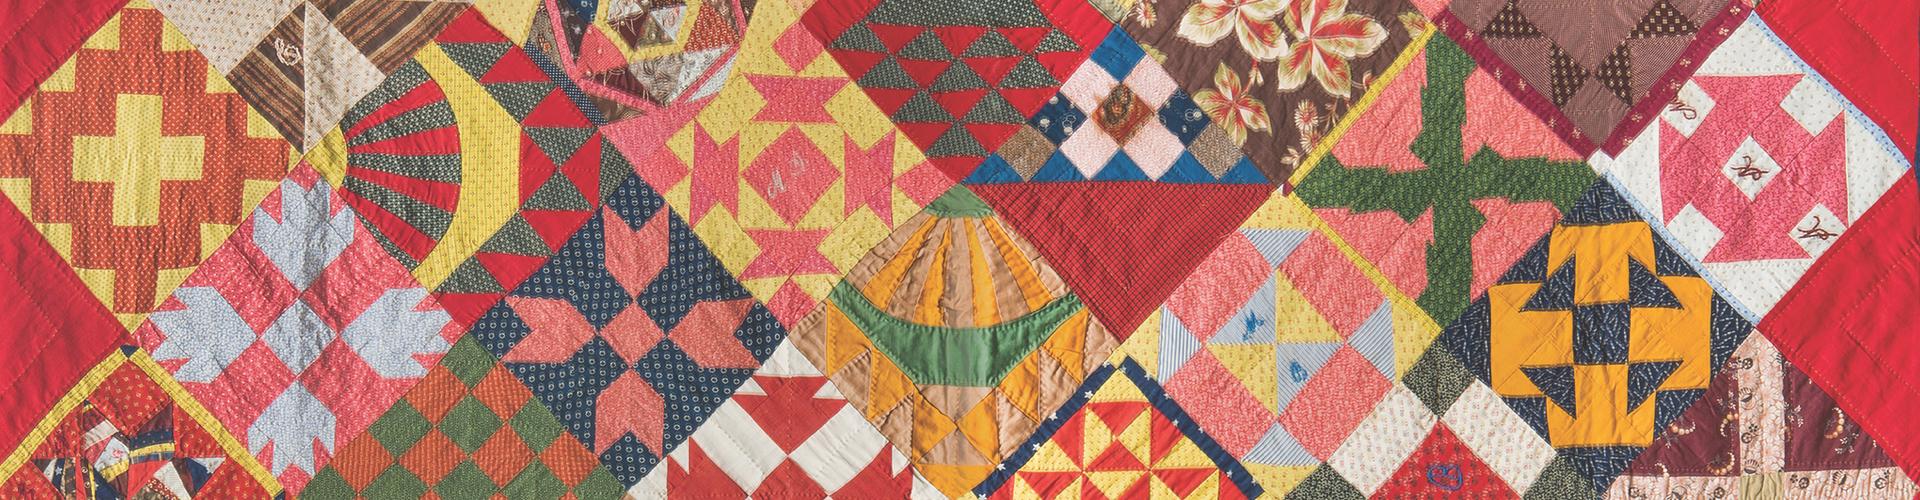 multicolored patchwork quilt